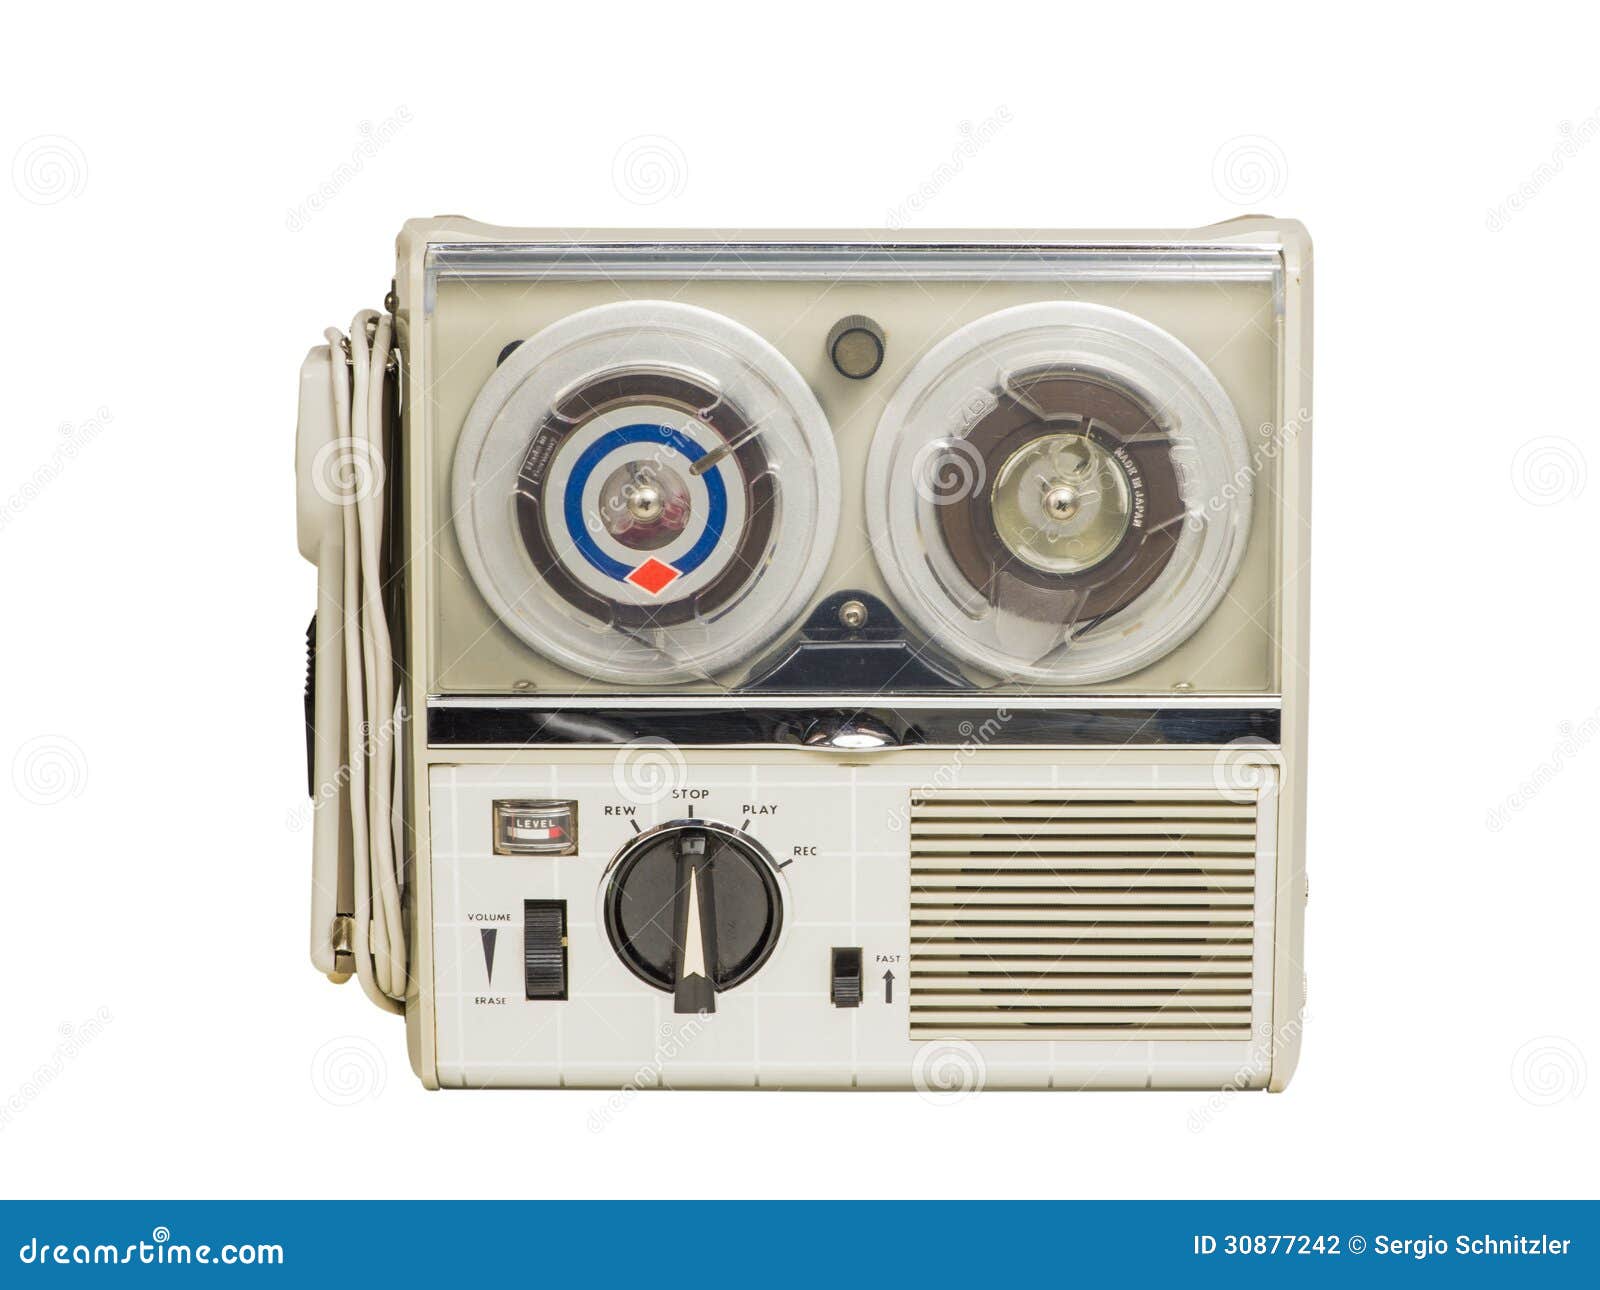 Mini Old Tape Recorder 02 stock photo. Image of electronics - 30877242